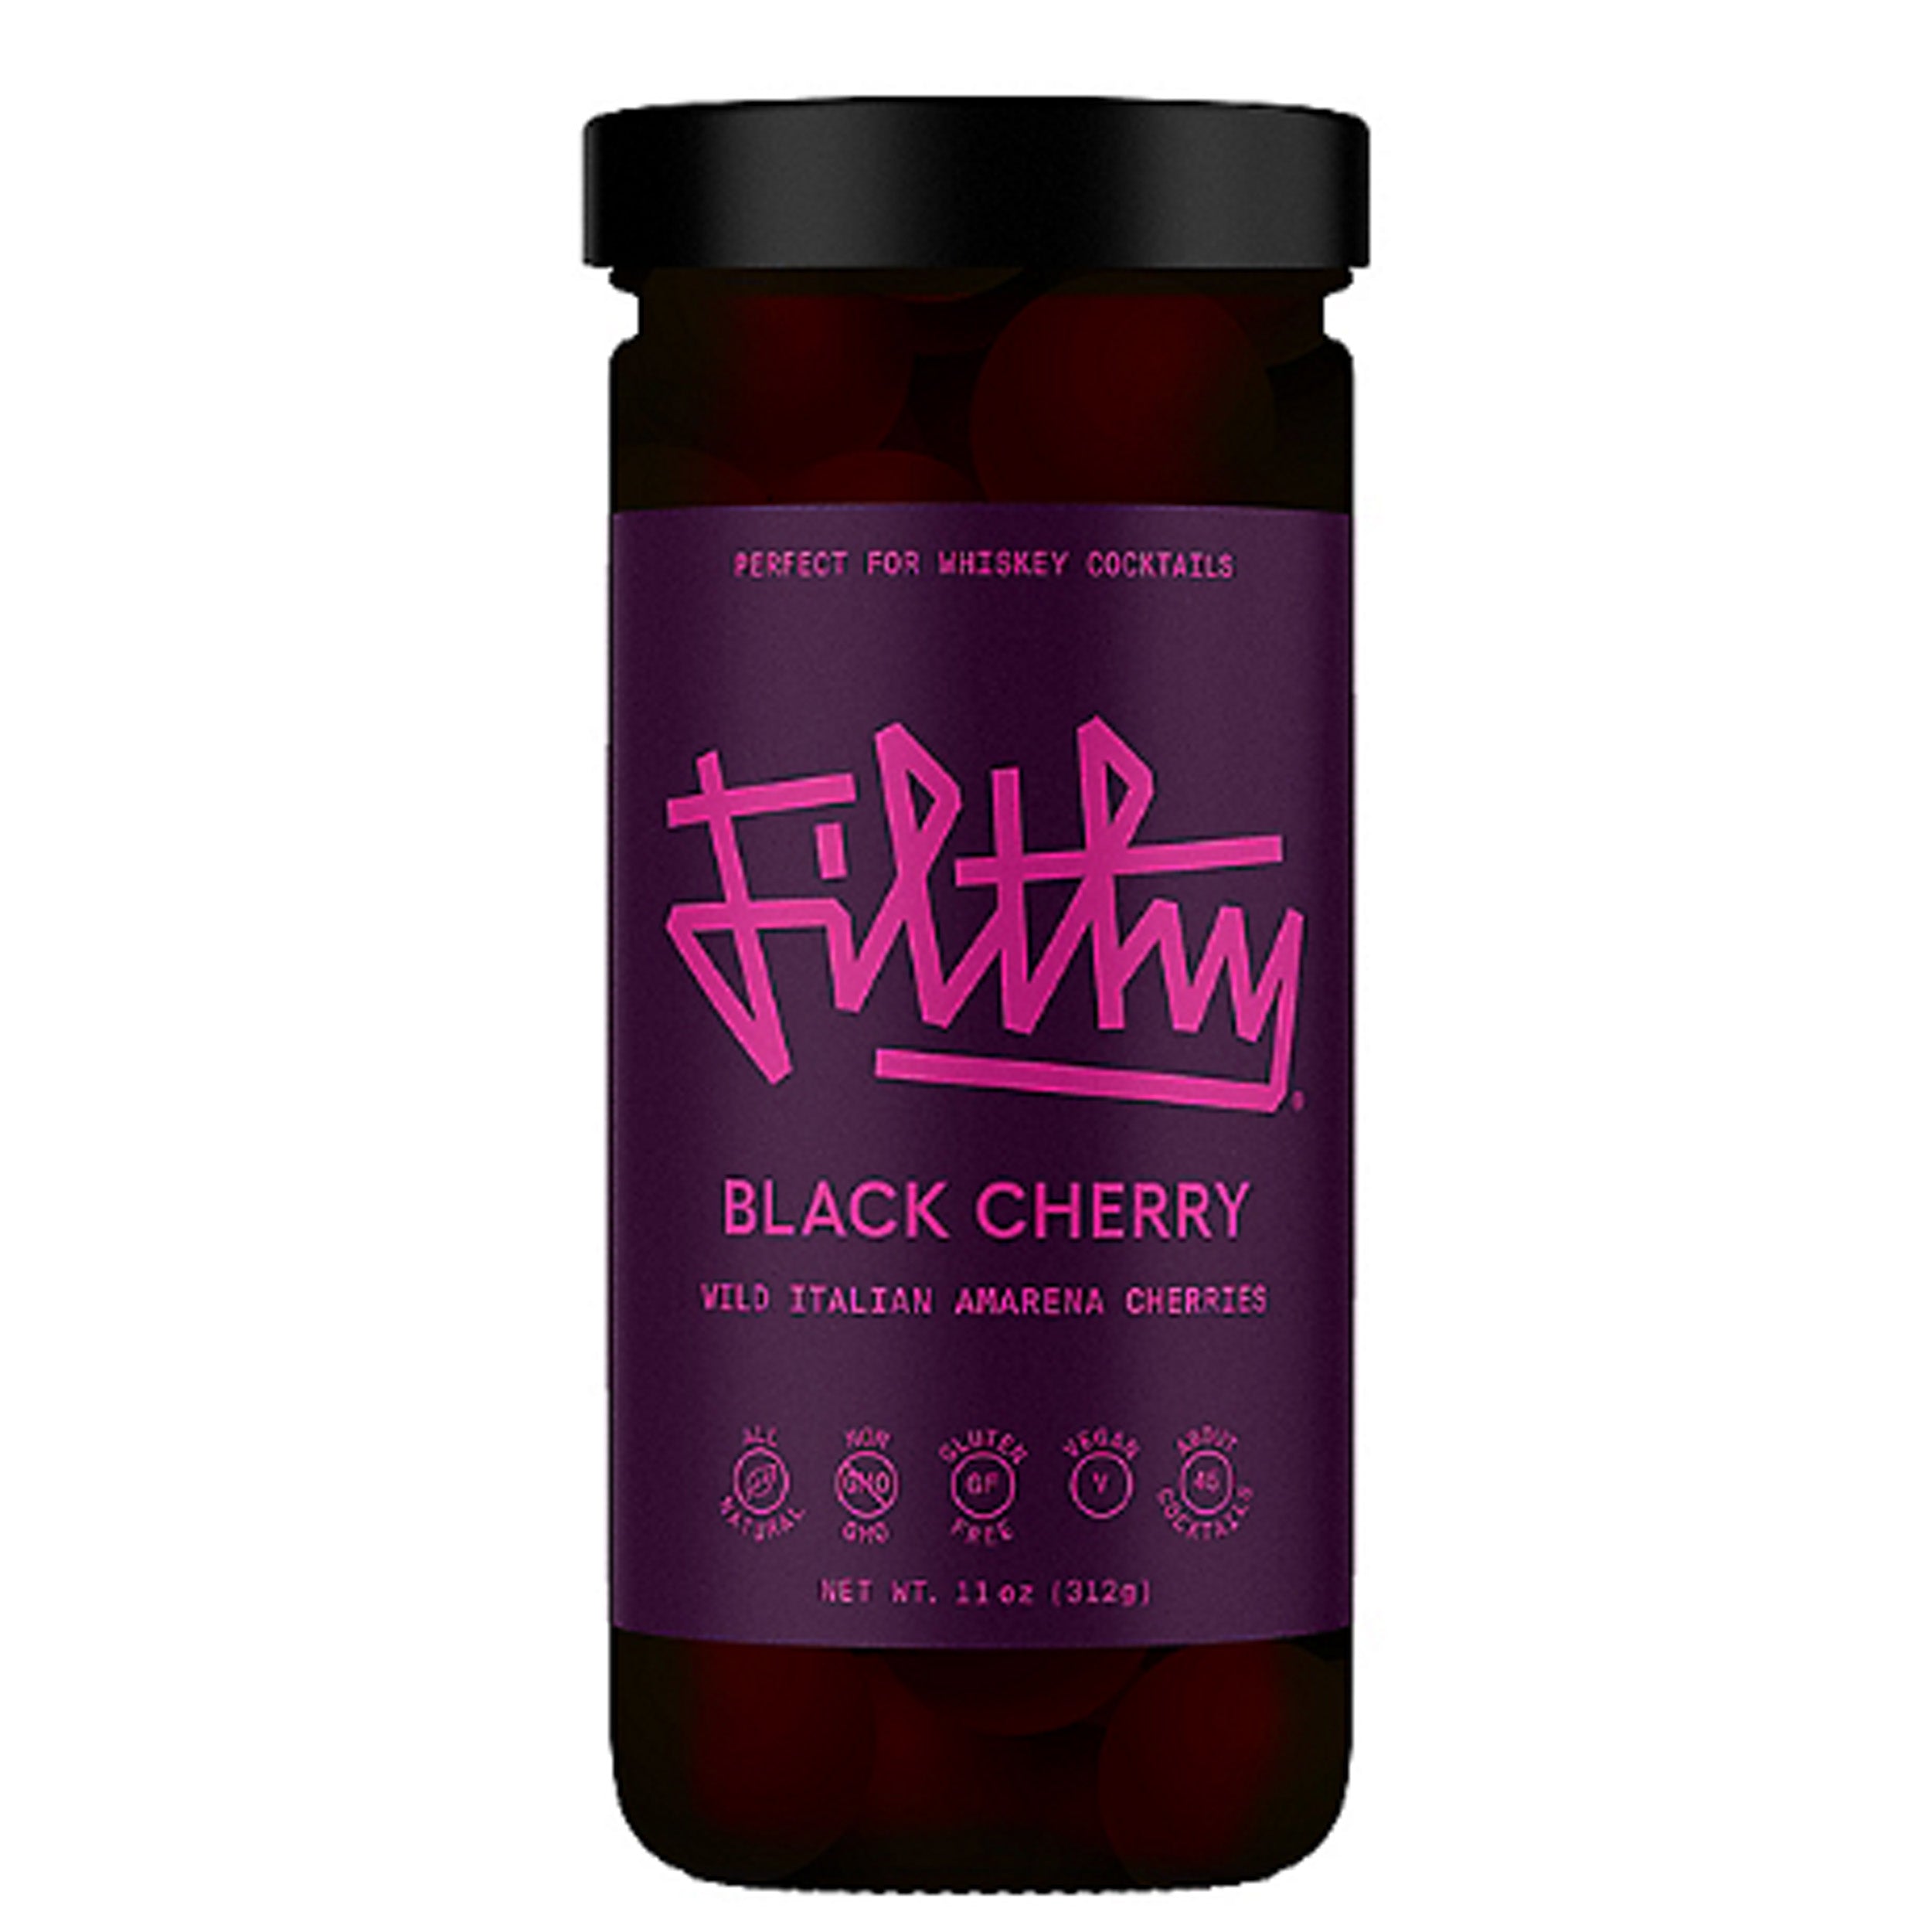 Filthy Black Cherry